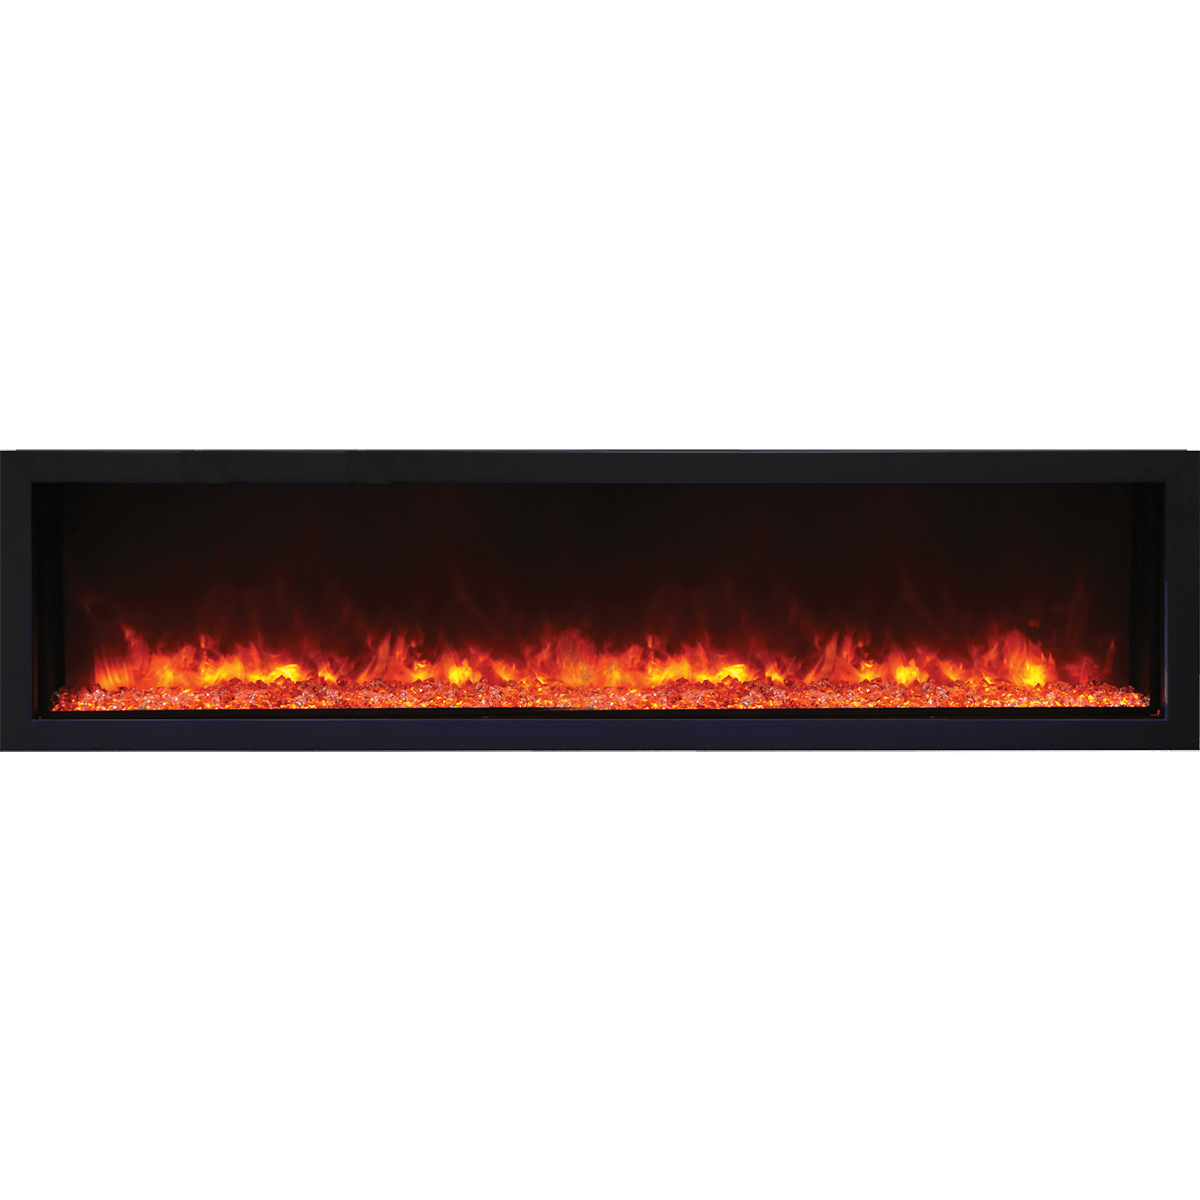 Remii Extra Slim Indoor/Outdoor Built-In Electric Fireplace - 65 Inch